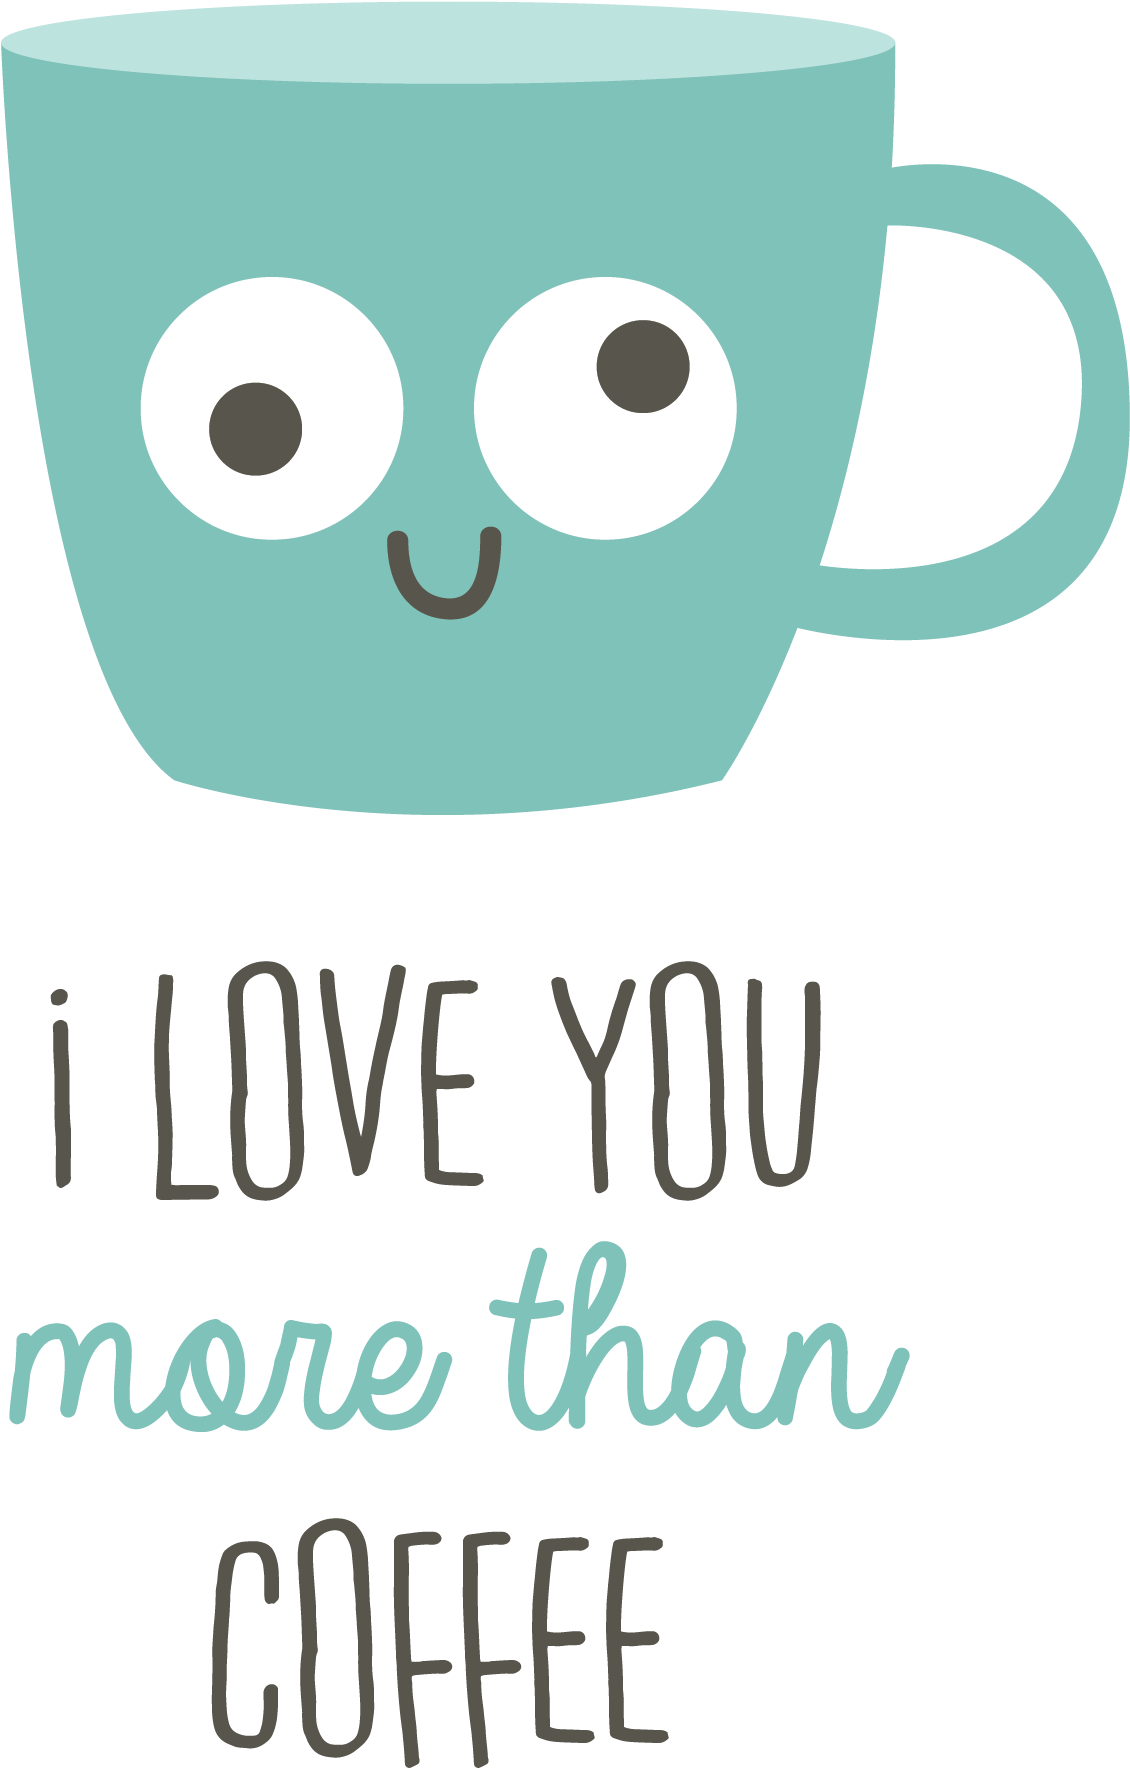 I Love You More Than Coffee - Coffee Cup (2480x2242)